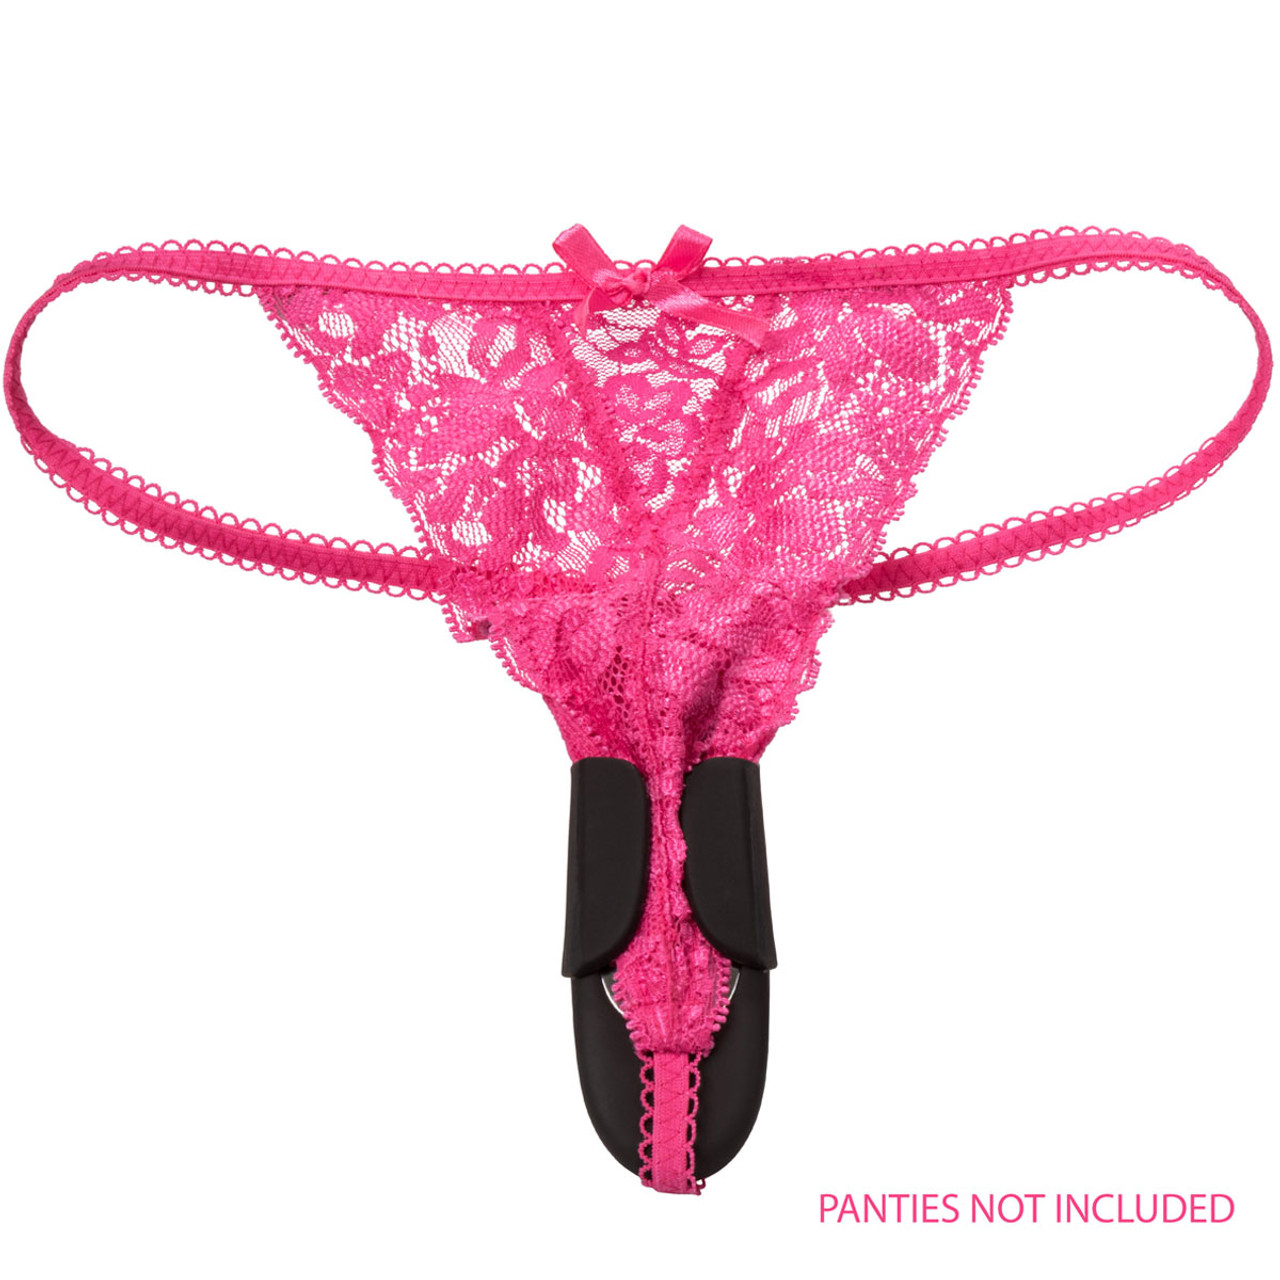 Lock-N-Play Remote Panty Teaser by CalExotics